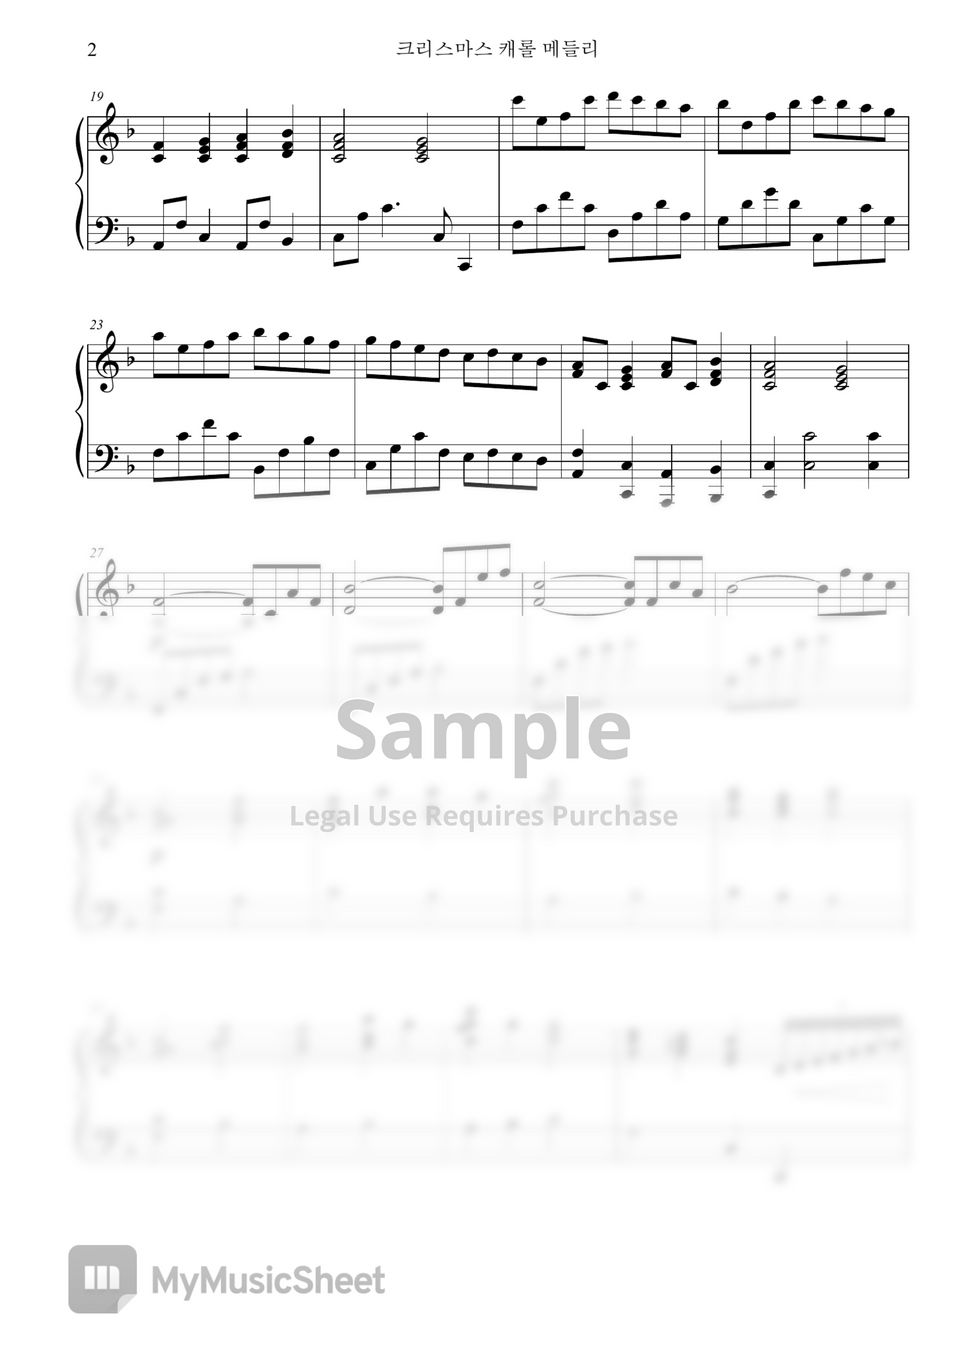 F.Mendelssohn - 크리스마스 캐롤 메들리 피아노 4중주 (플룻,클라리넷,첼로,피아노) by Pianist Jin